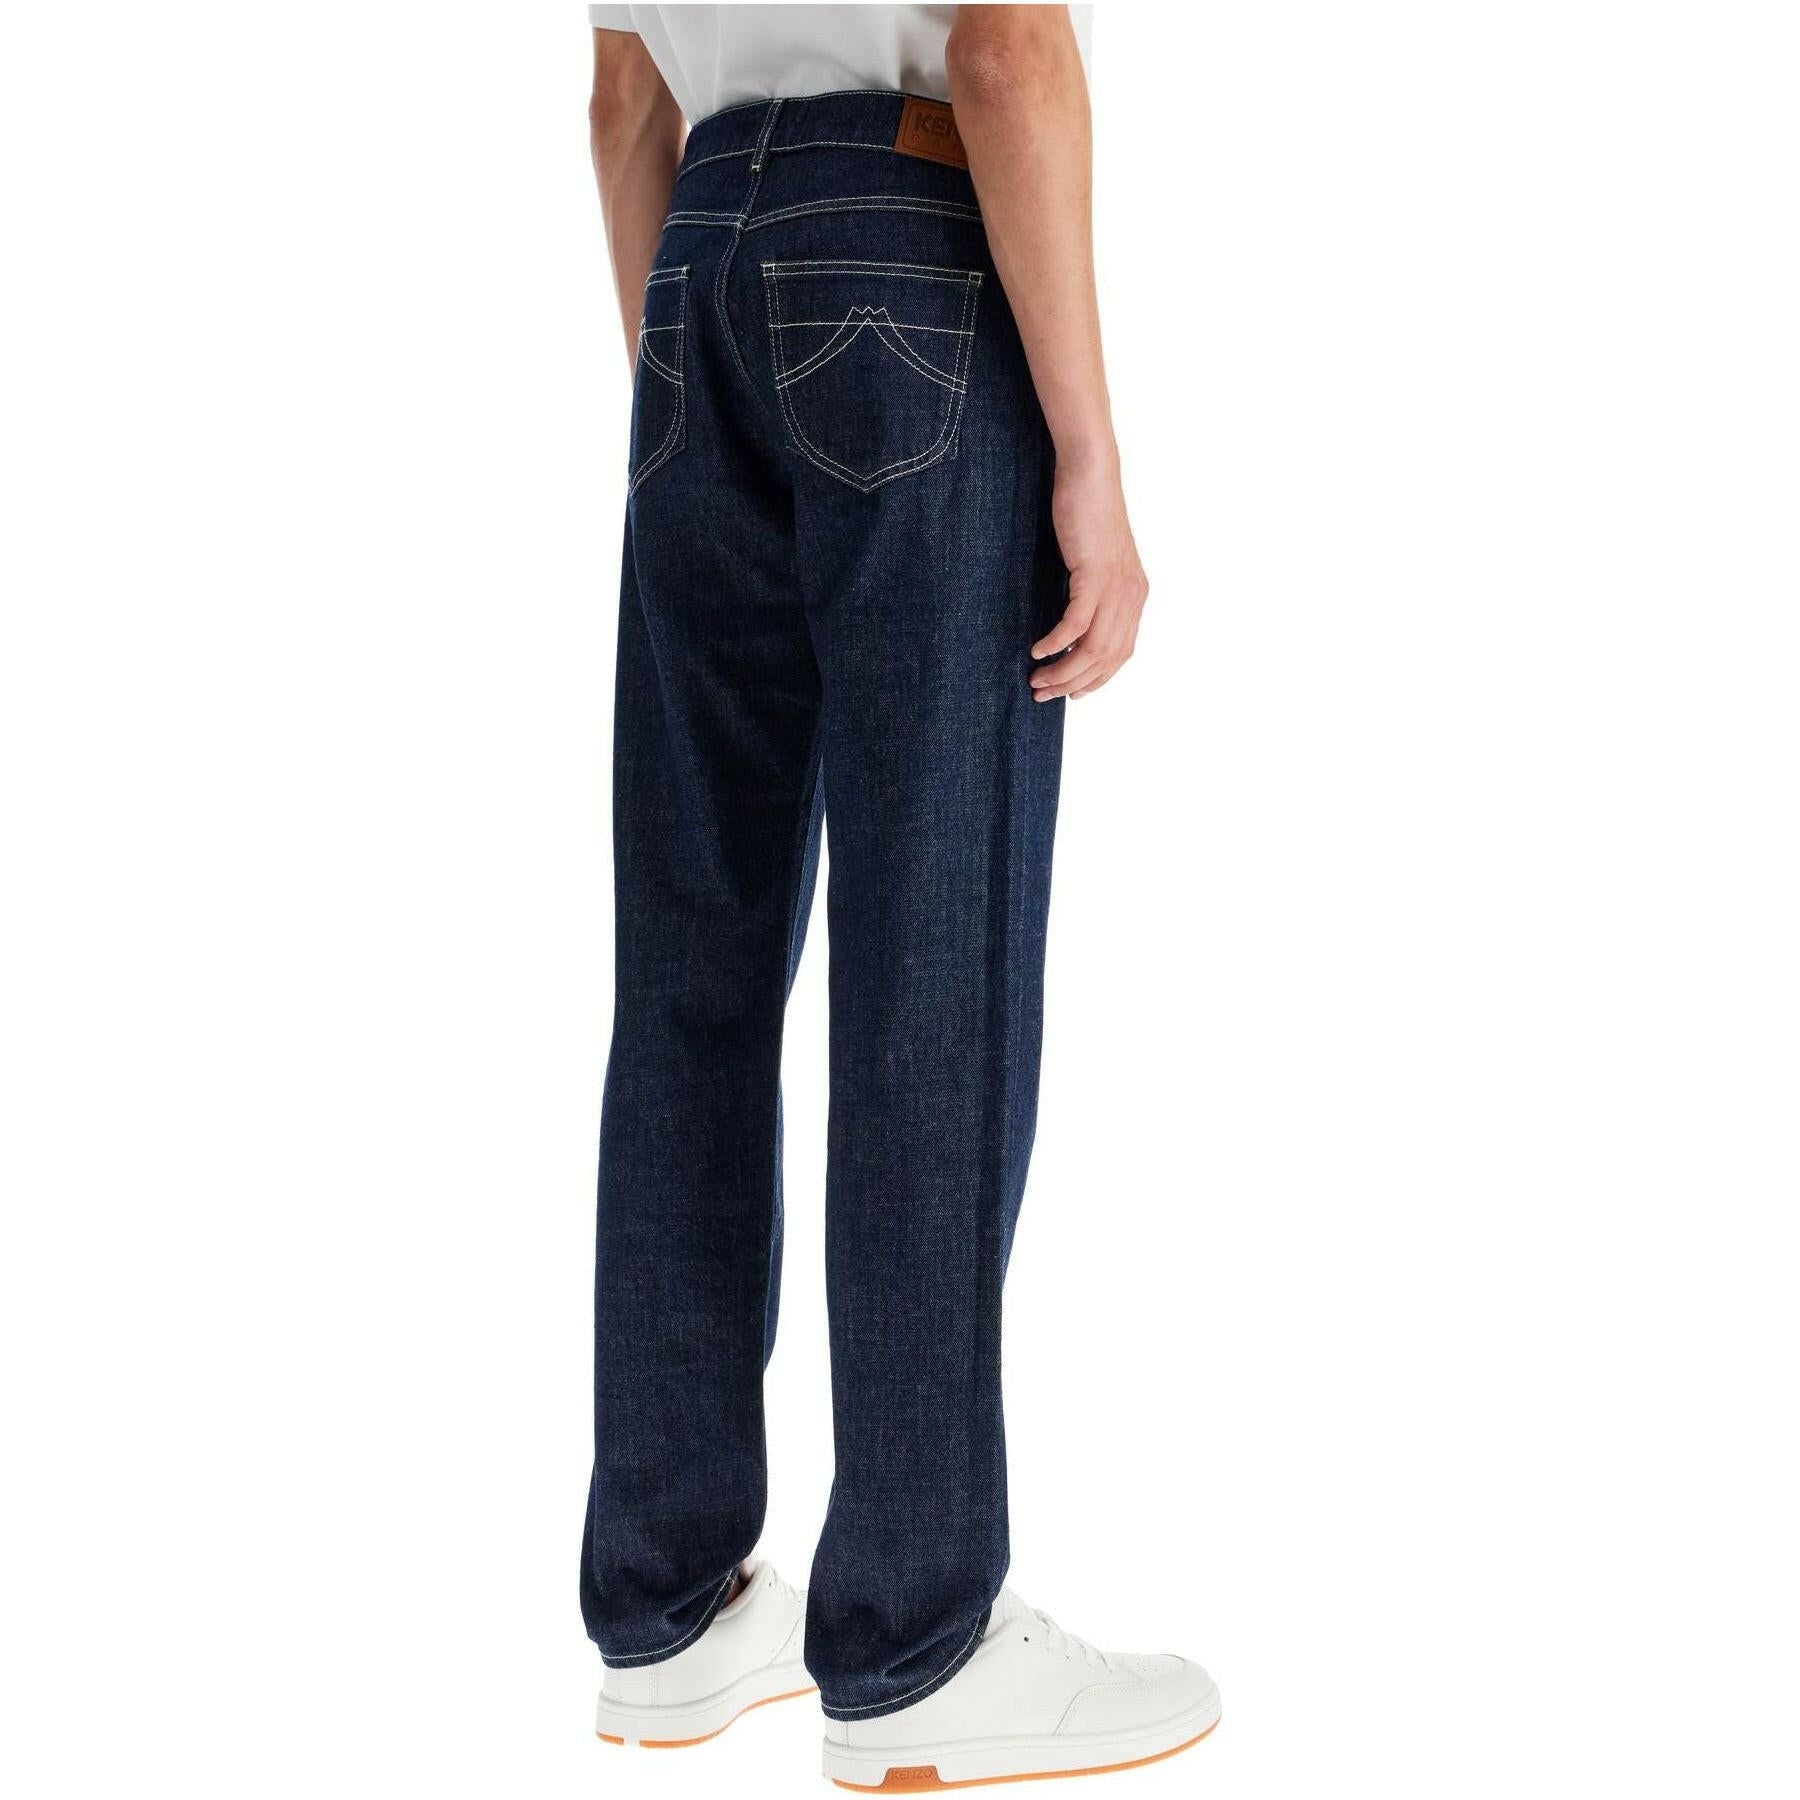 BARA Japanese Denim Slim Fit Stretch Jeans.